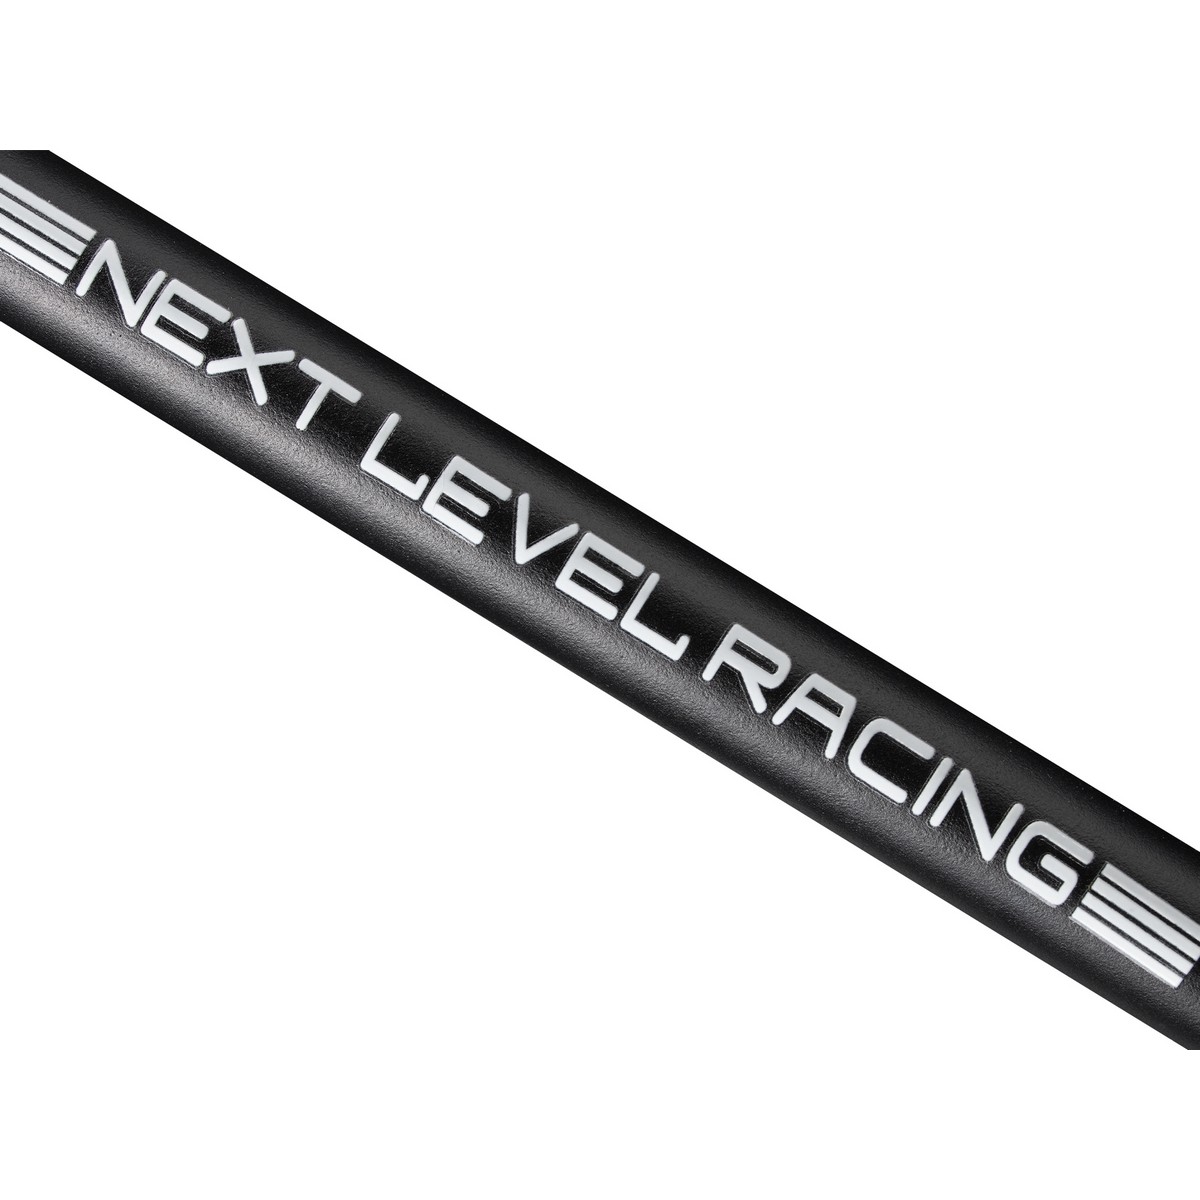 Next Level Racing - Next Level Racing Go Kart Cockpit Racing Simulator (NLR-S034)